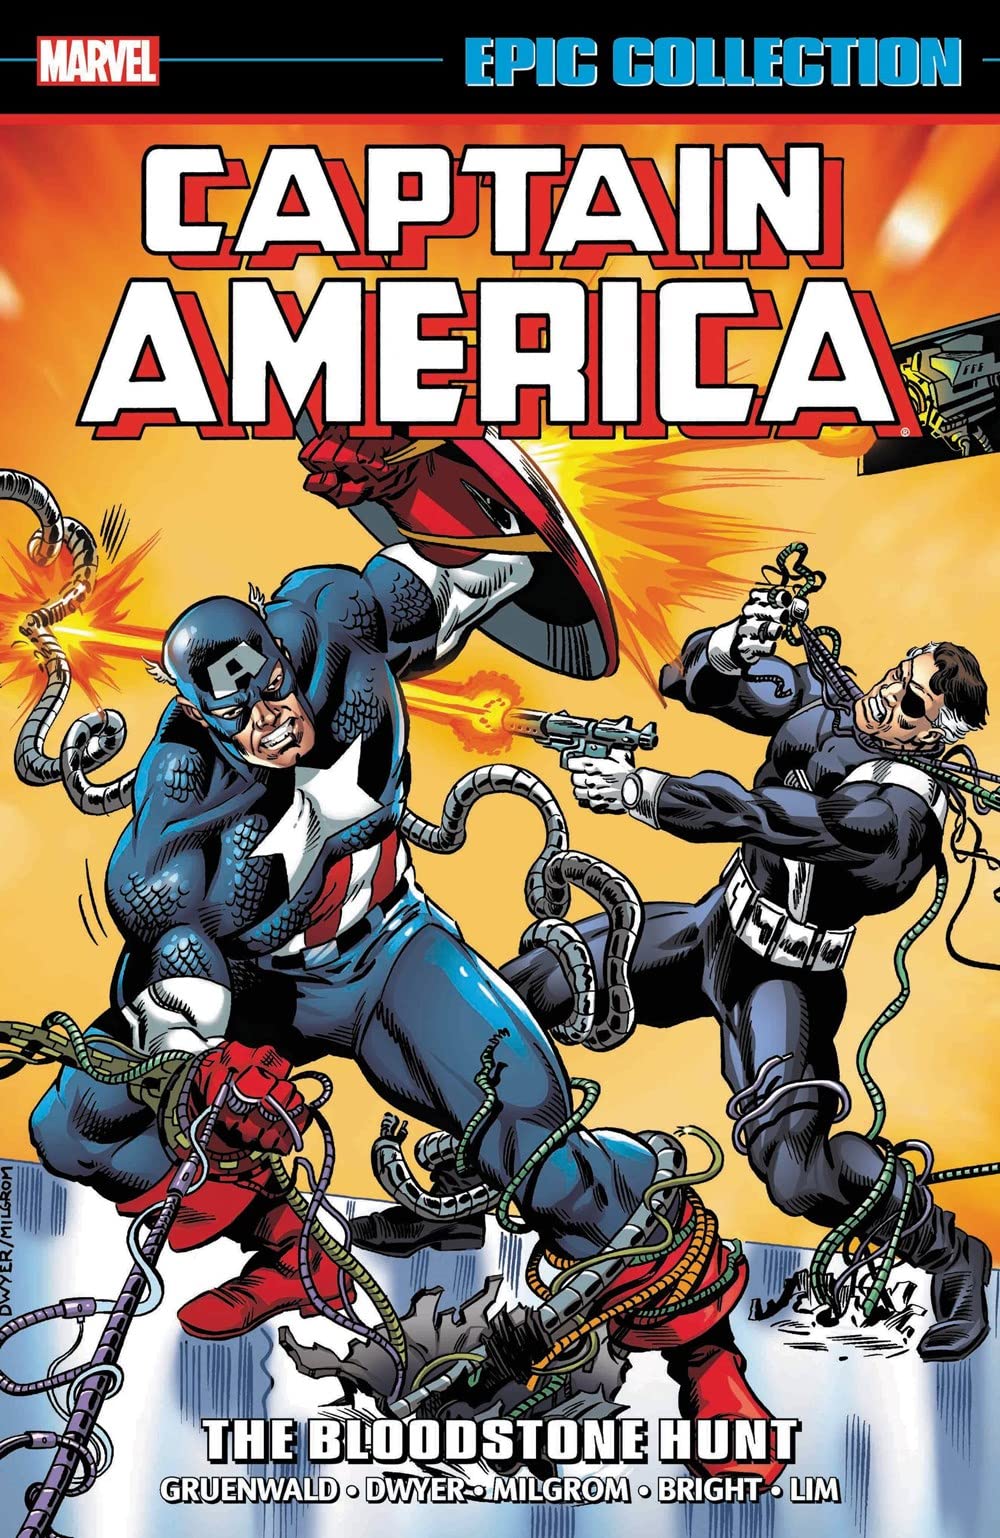 captain america, marvel comics, marvel epic collection, Marvel graphic novel - Best Books